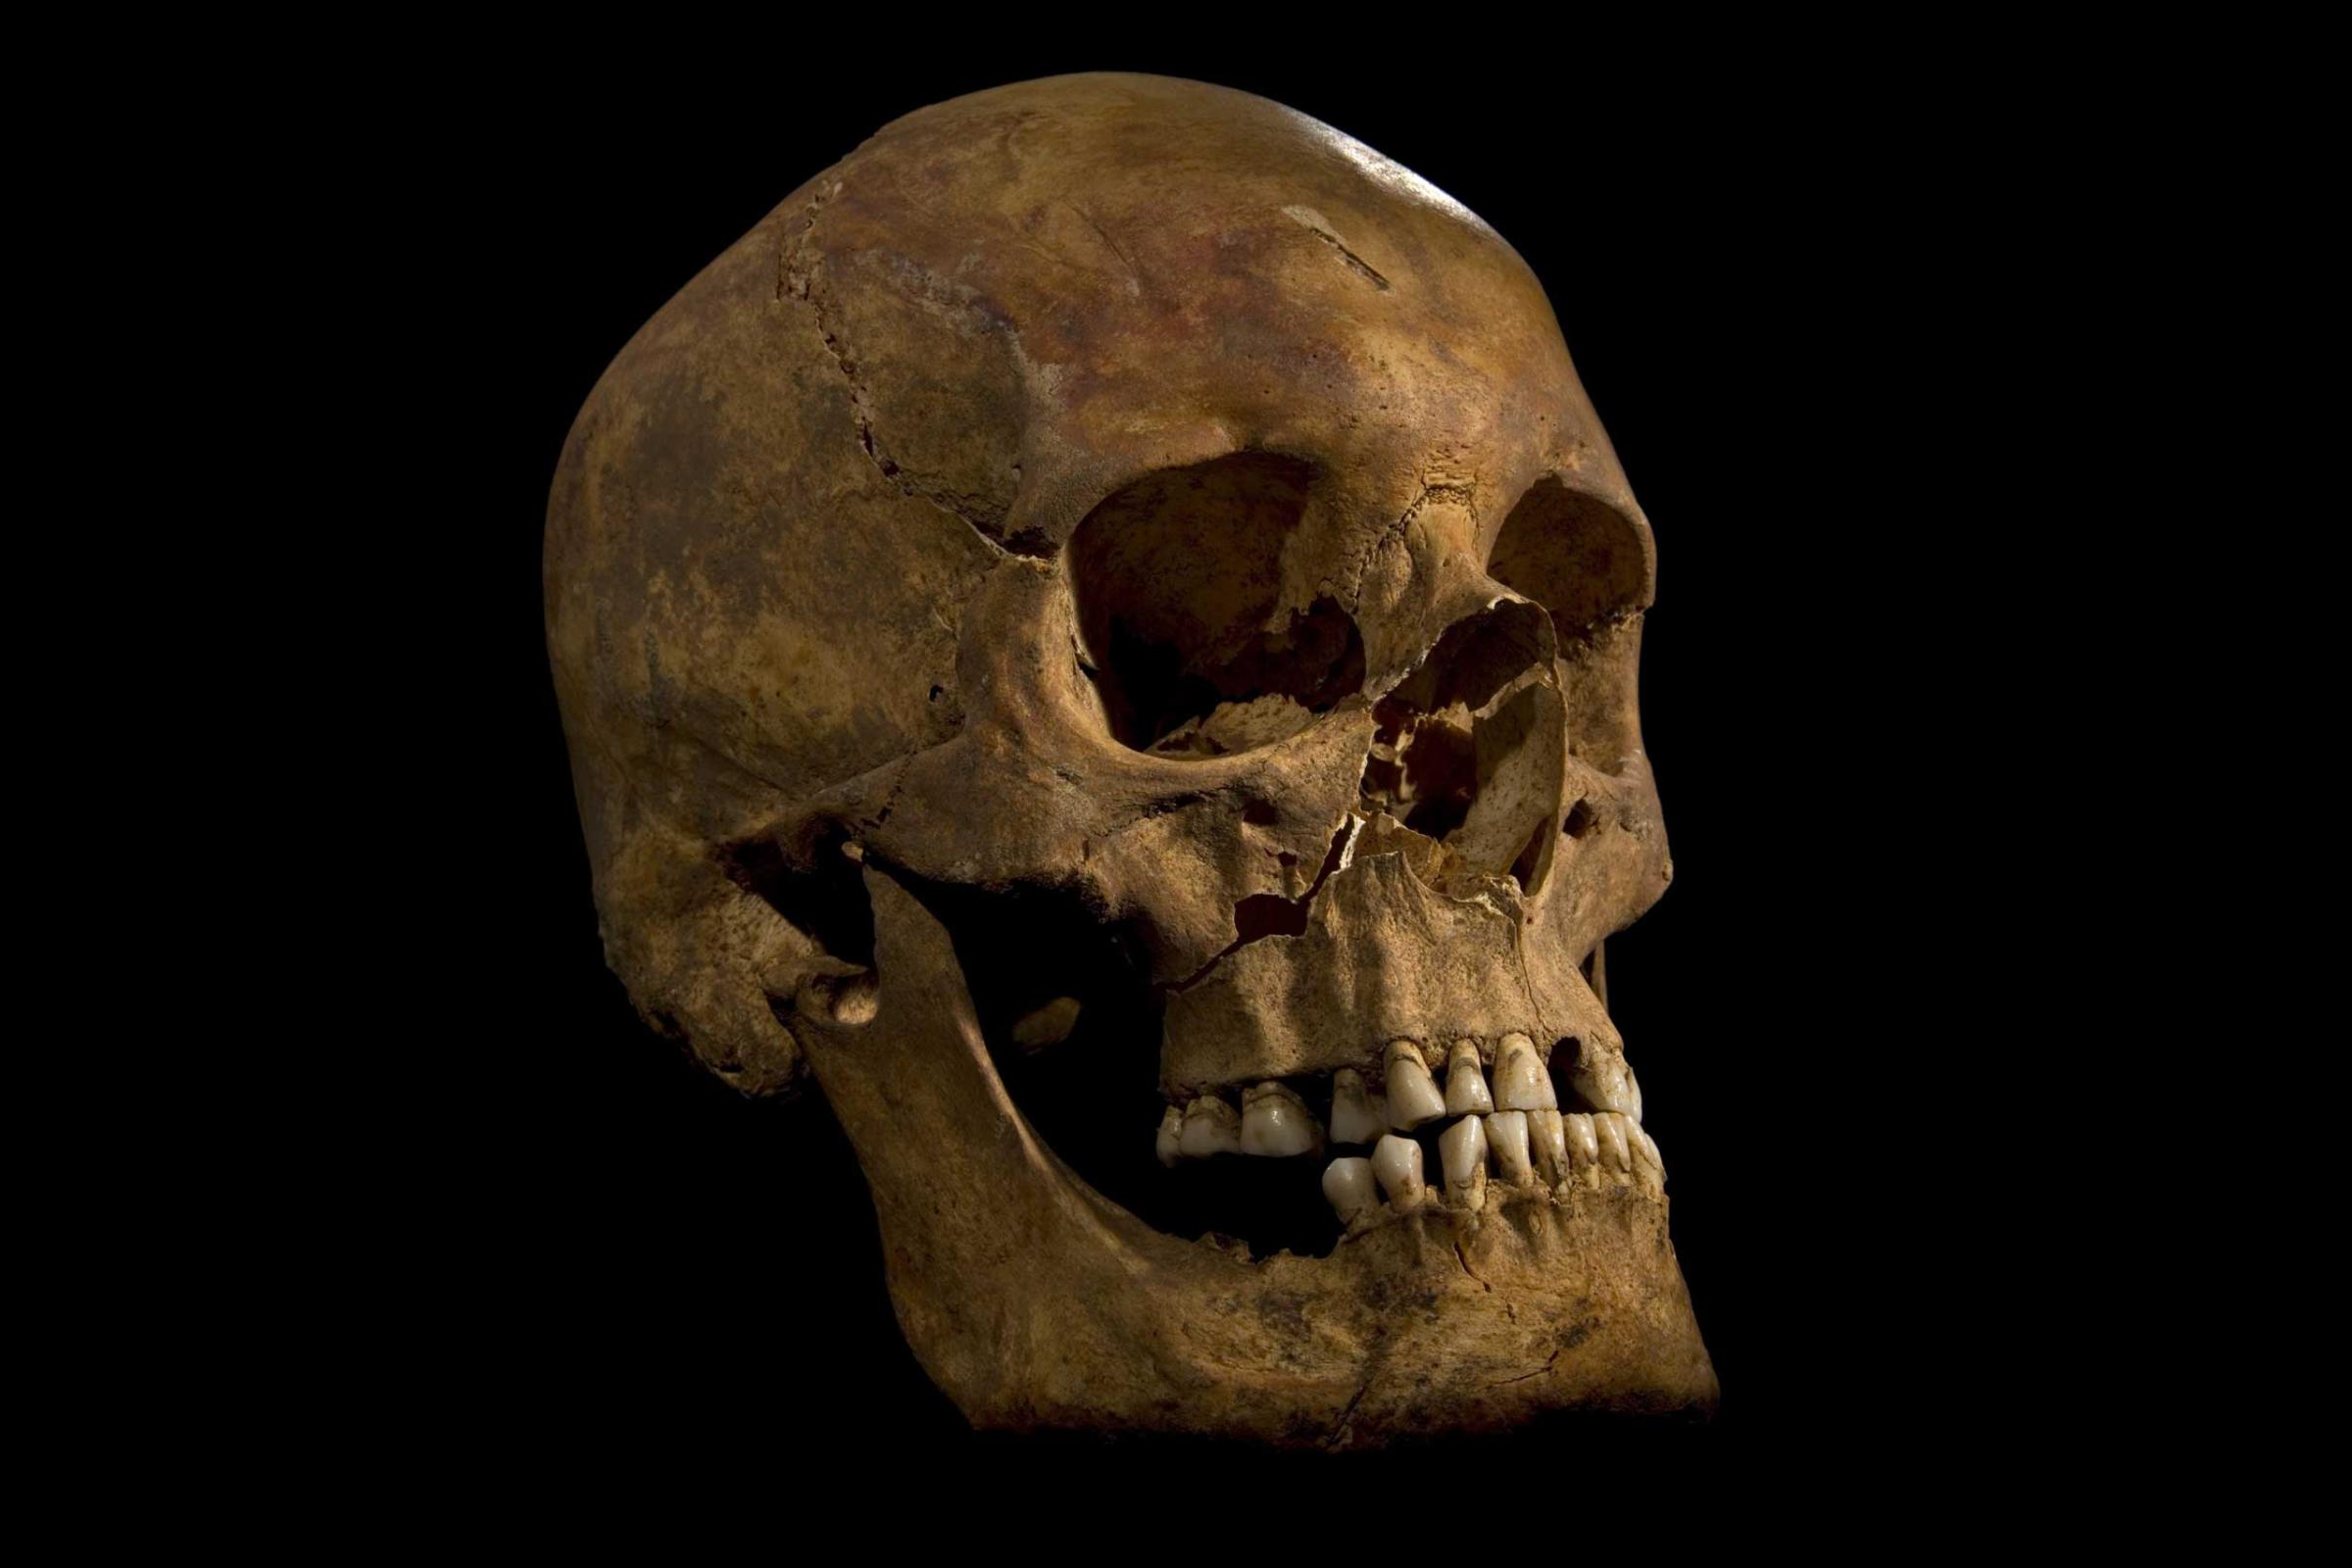 Richard III Skeleton Discovered in England